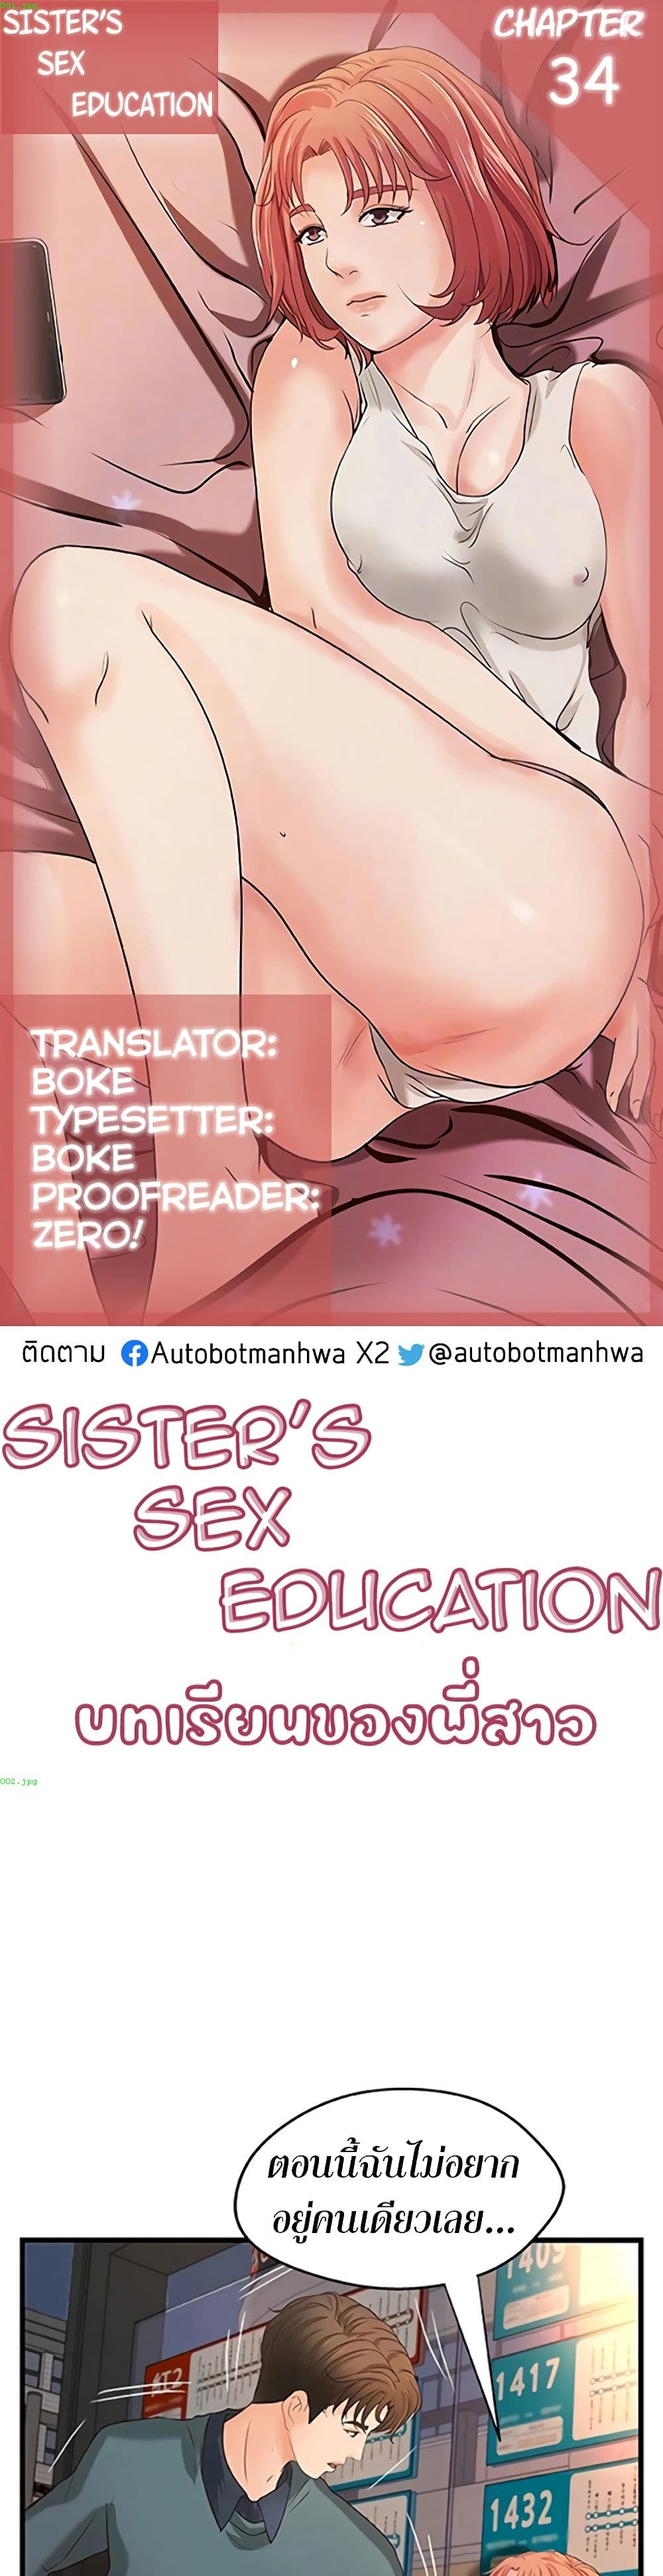 Sister's Sex Education 34-34